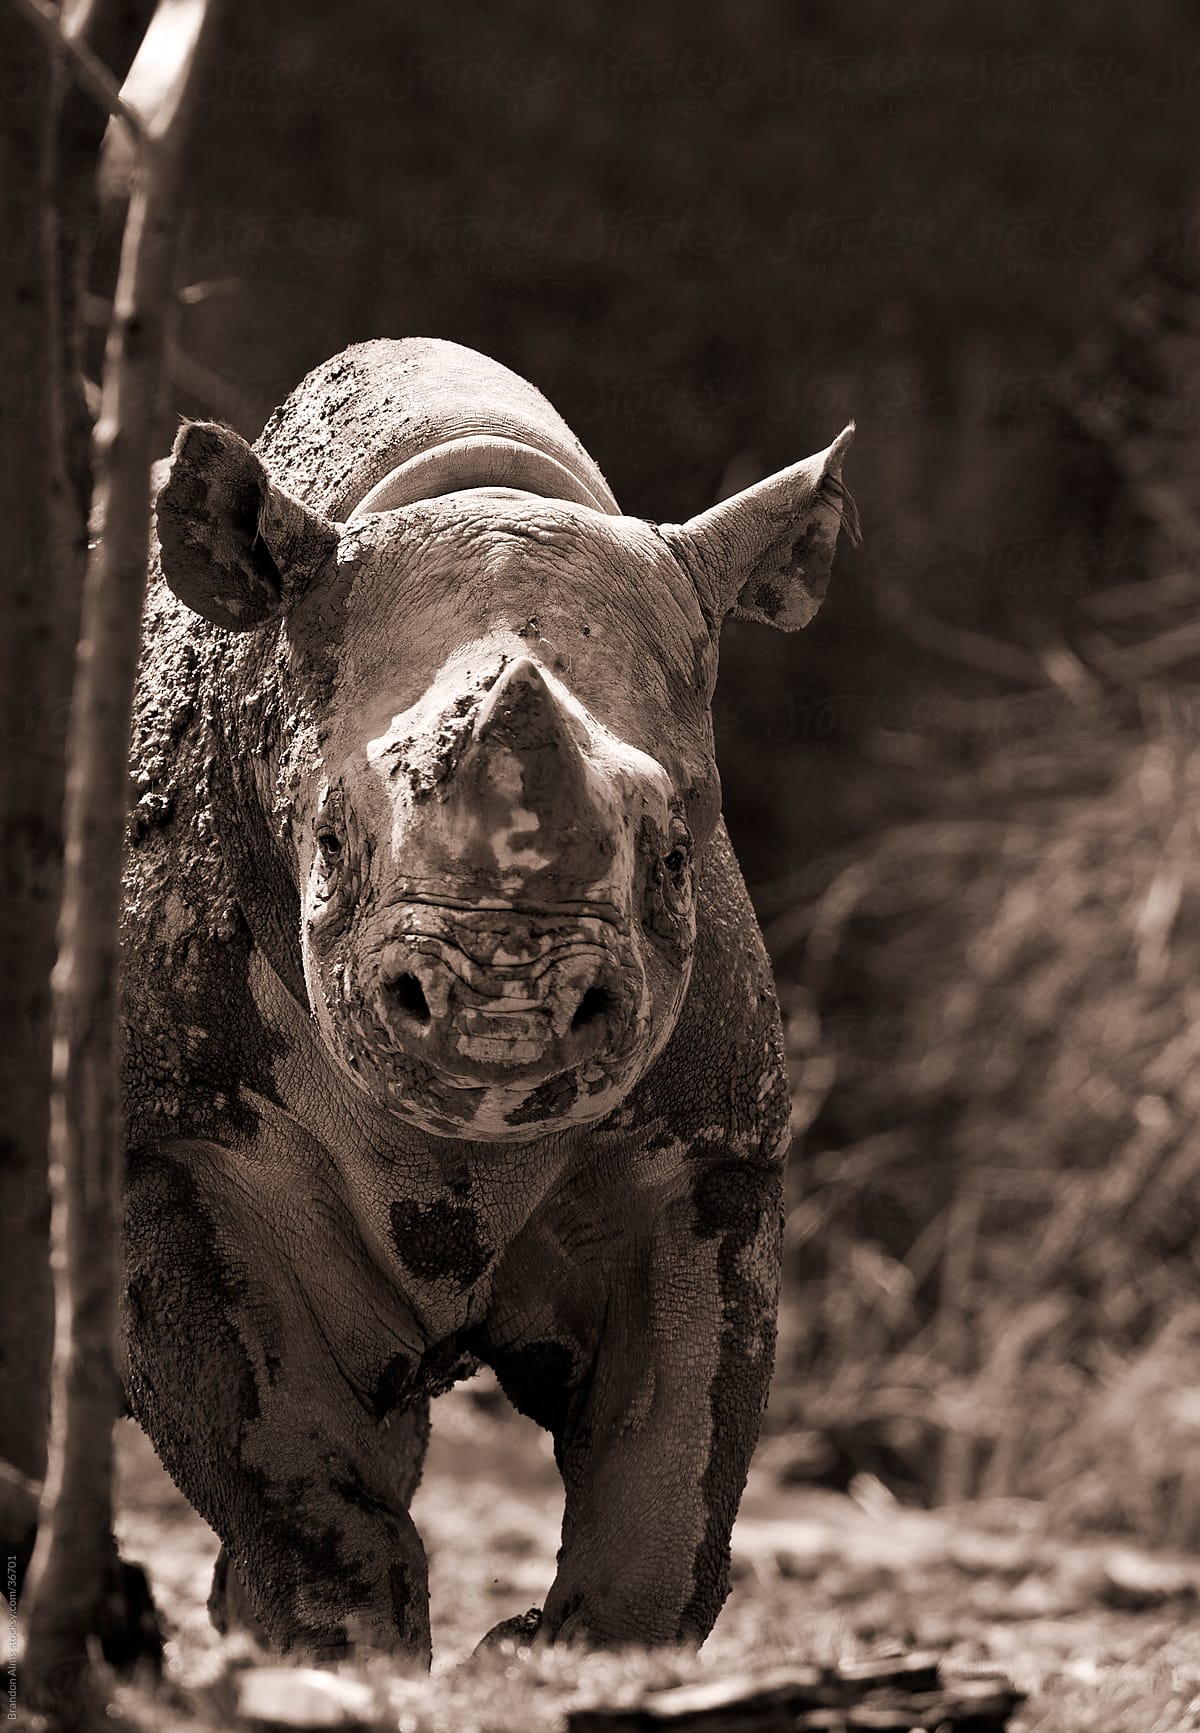 Endangered Black Rhinoceros Closeup Staring at the Camera